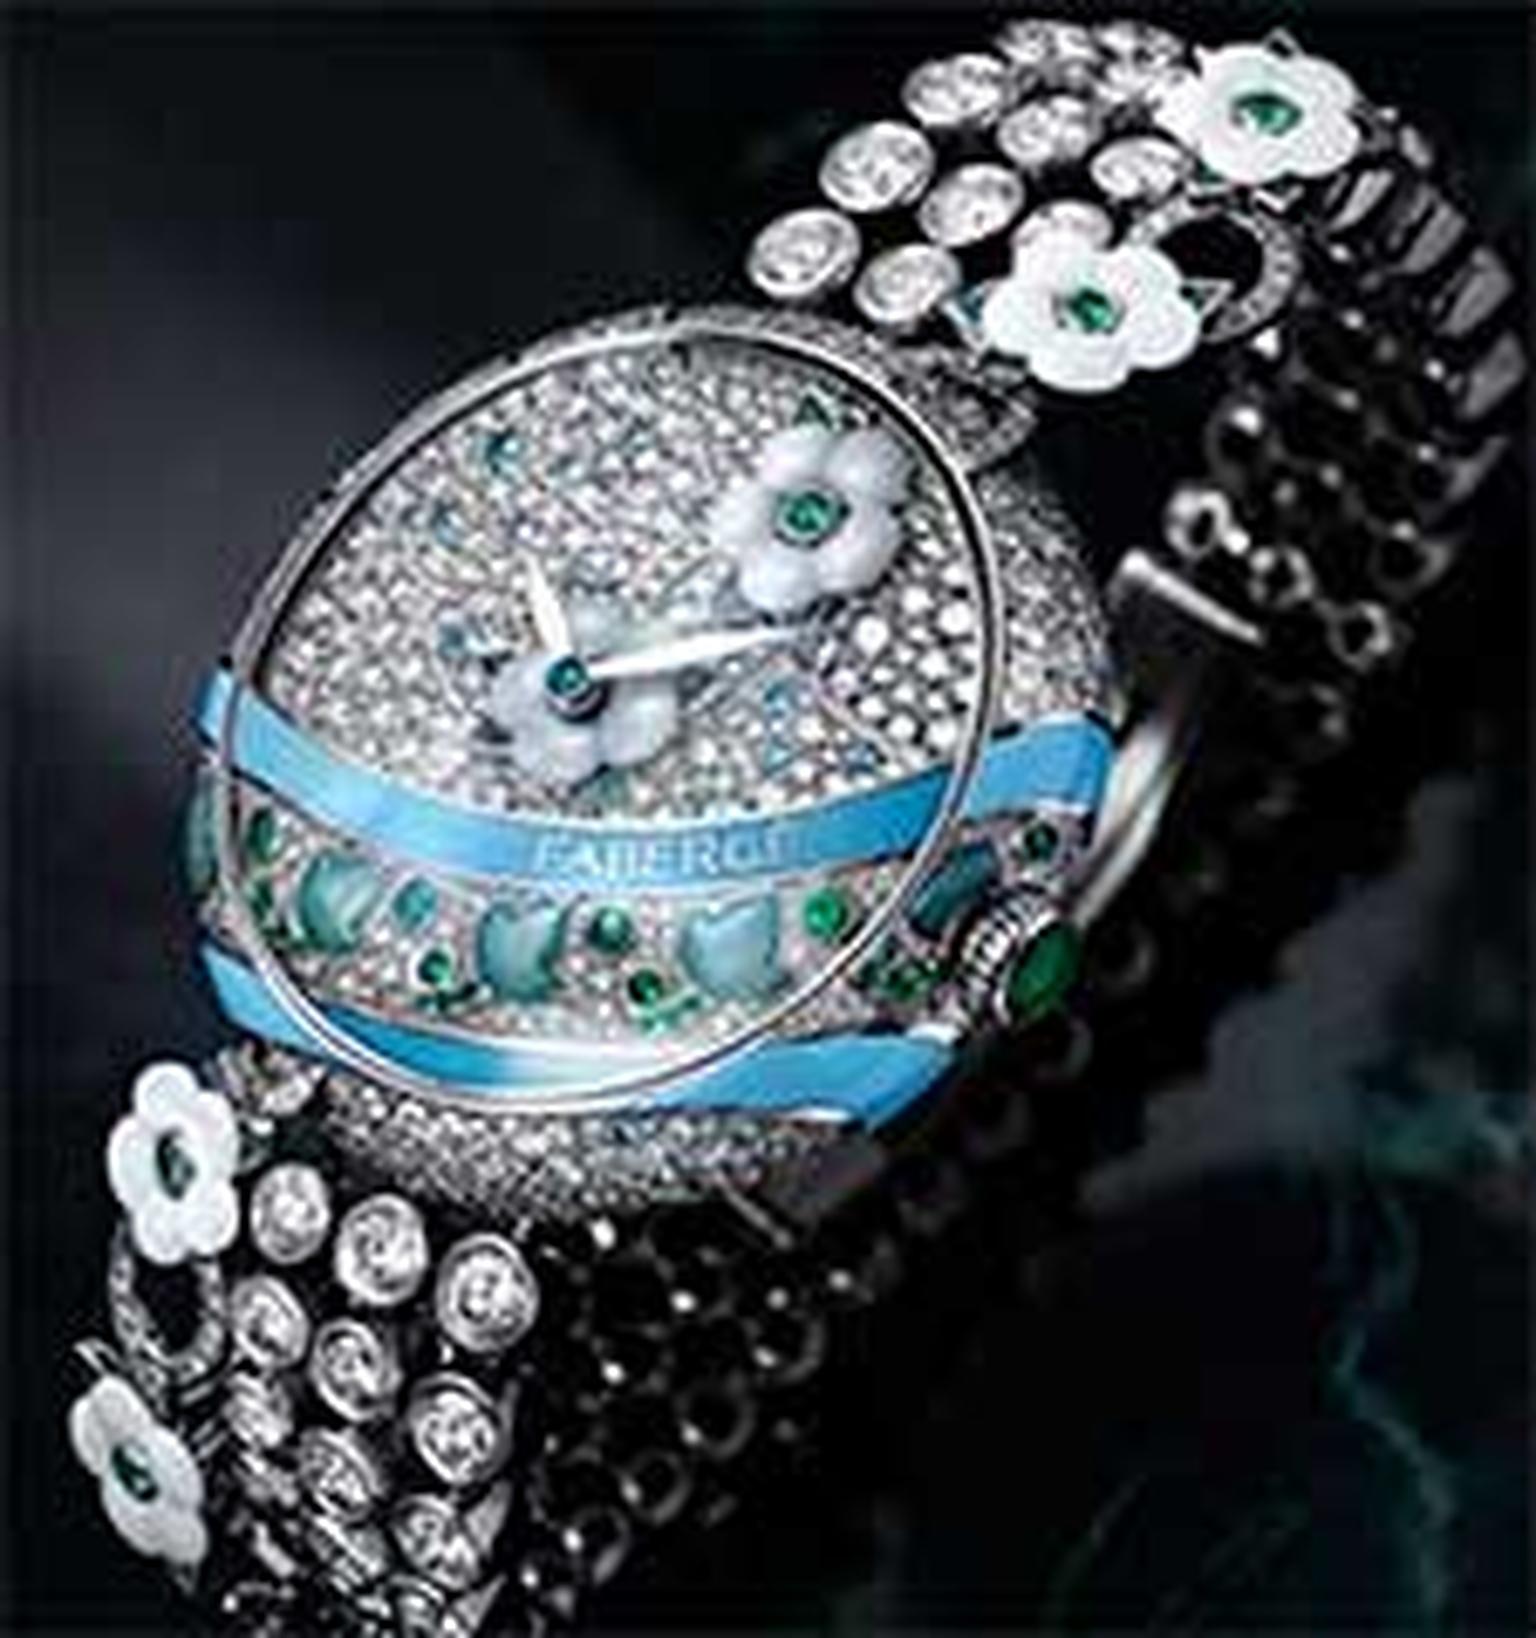 Fabergé jewellery watch